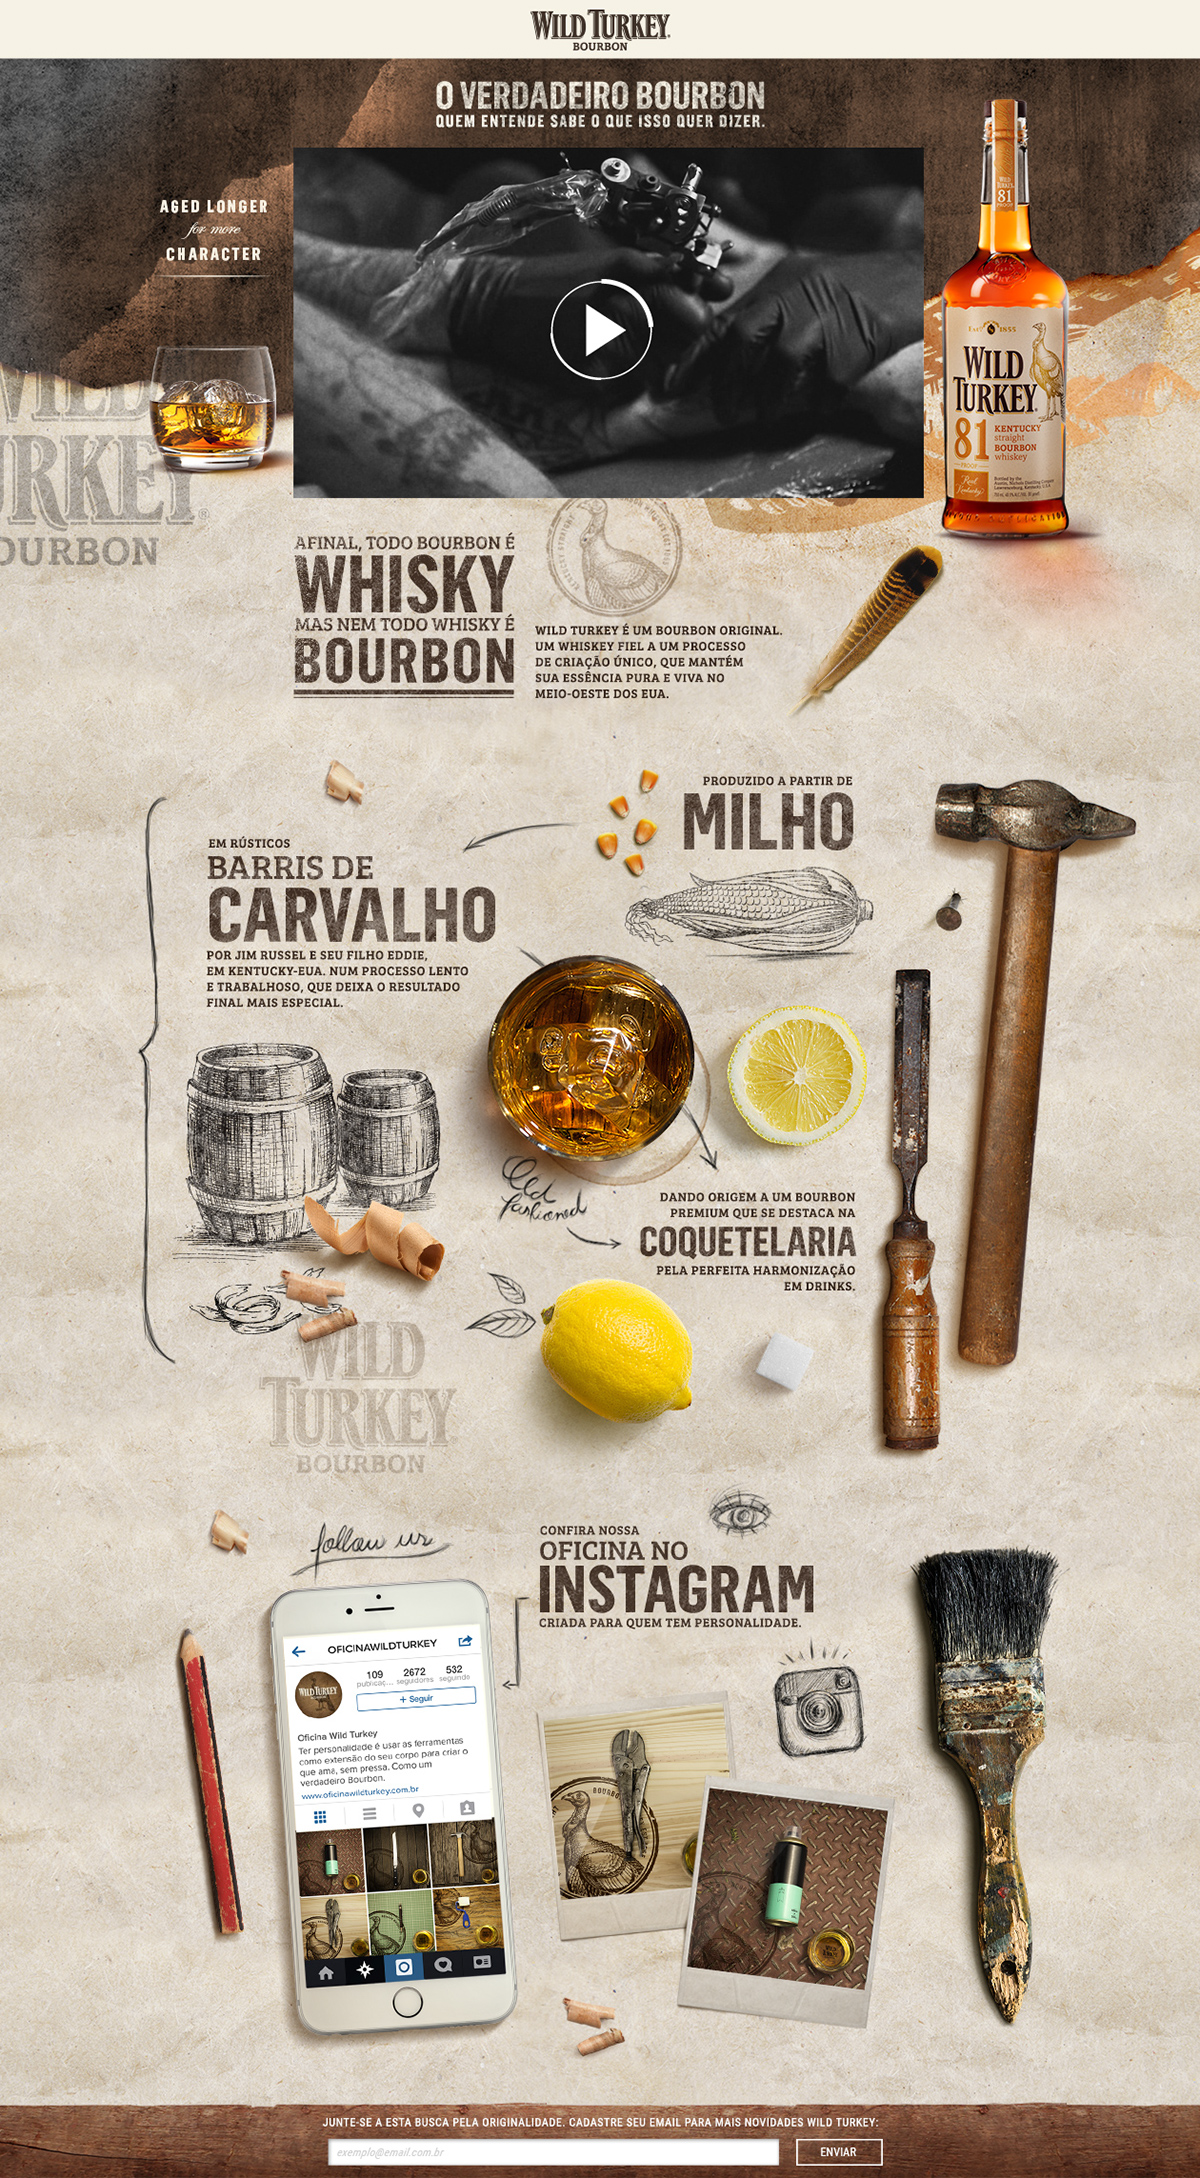 Whiskey bourbon drink drunk lemon maker wood Turkey mobile beard lamberjack